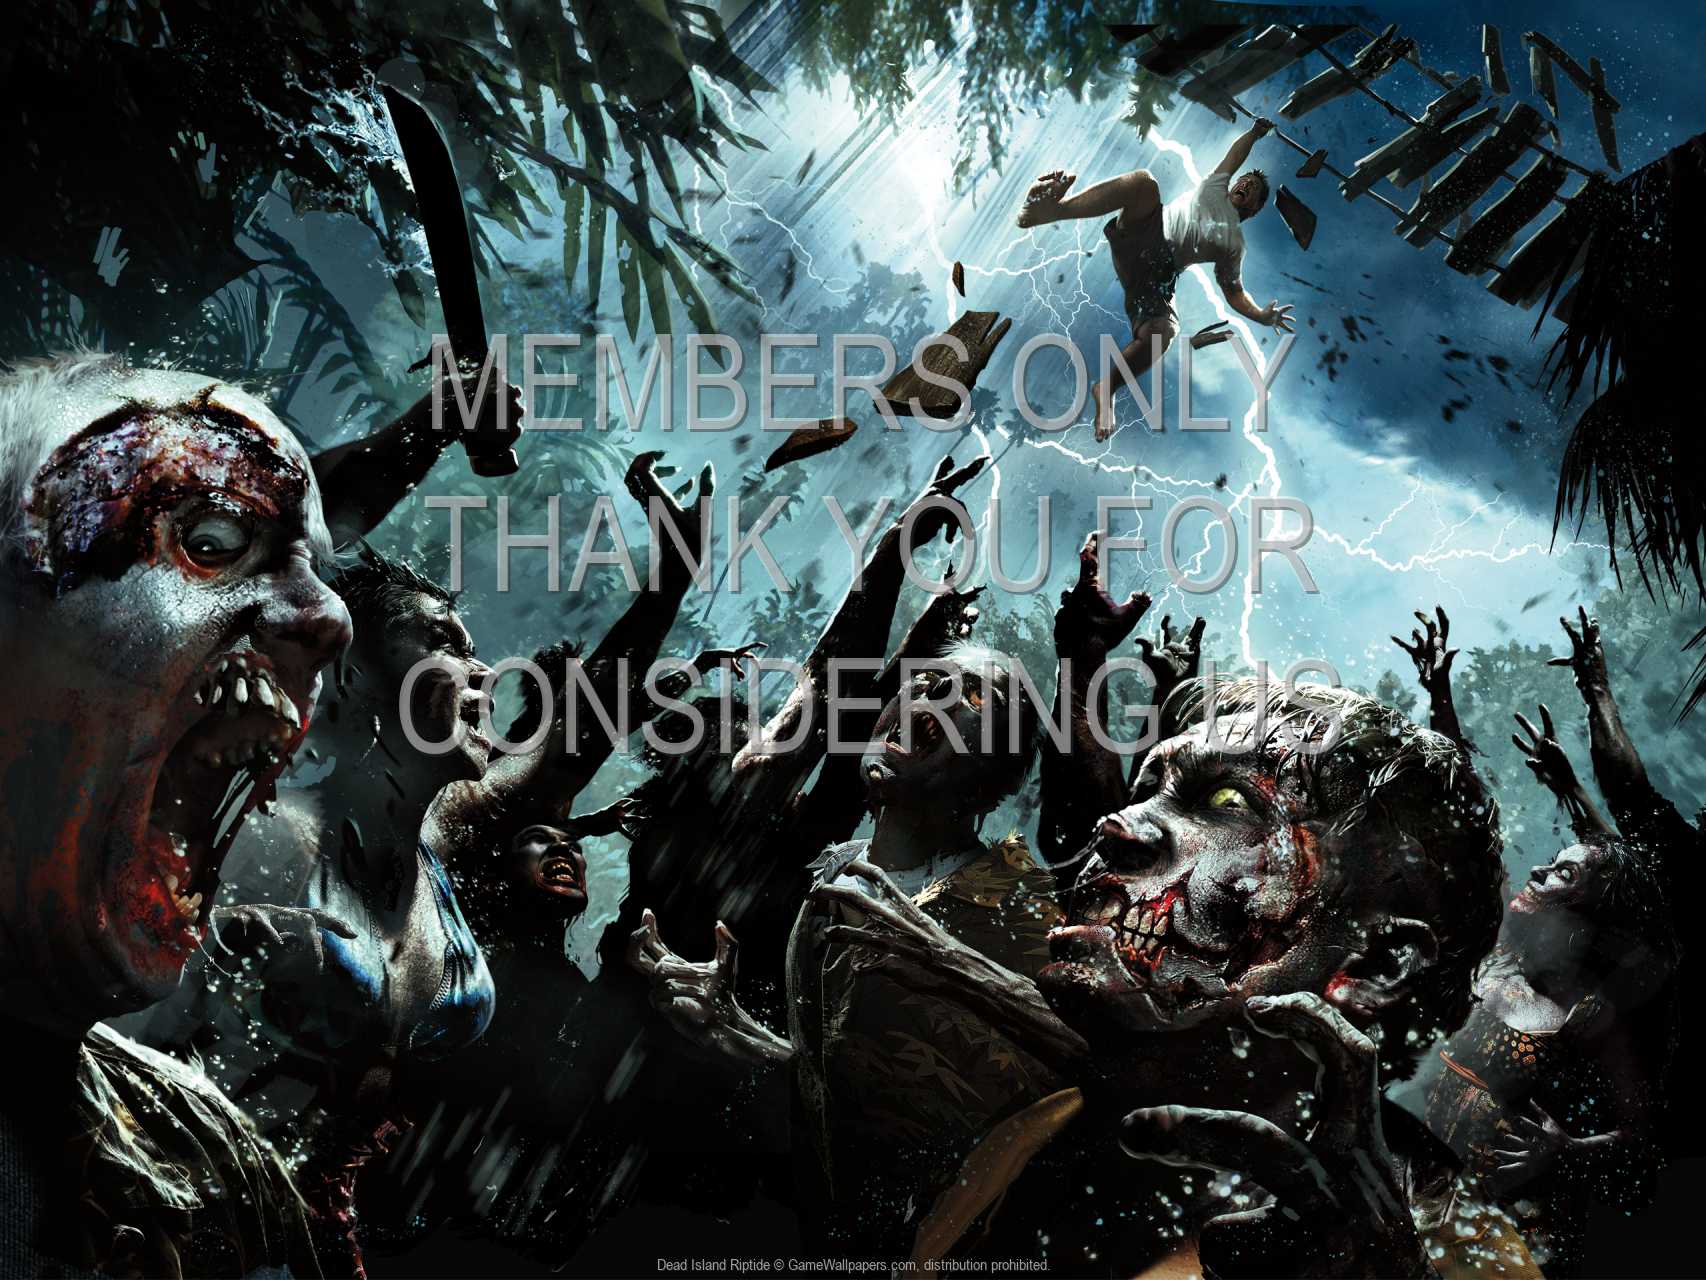 Dead Island Riptide 720p%20Horizontal Mobile wallpaper or background 02